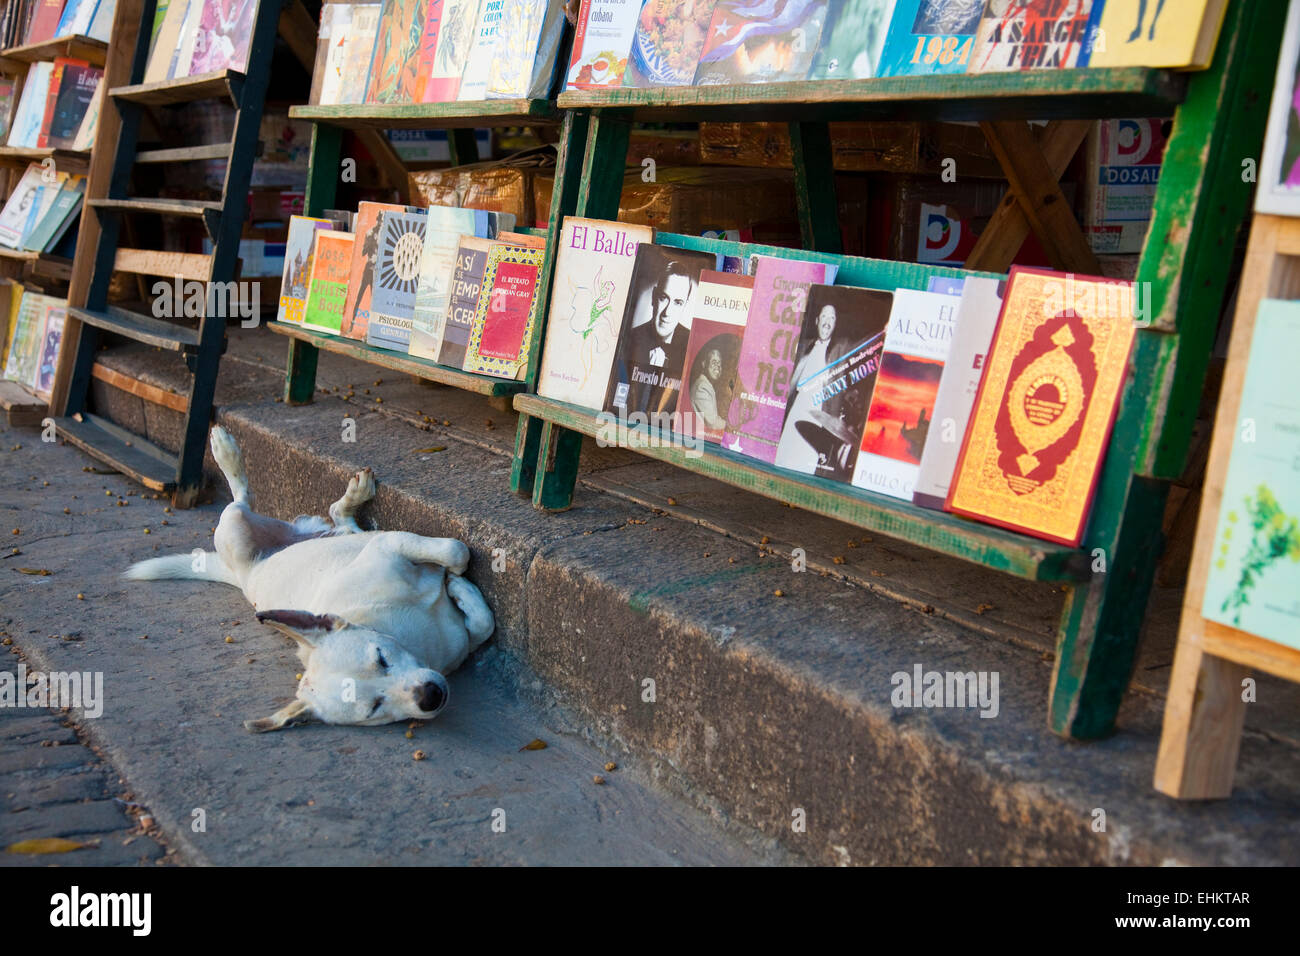 A dog sleeps at a book market in Havana, Cuba Stock Photo